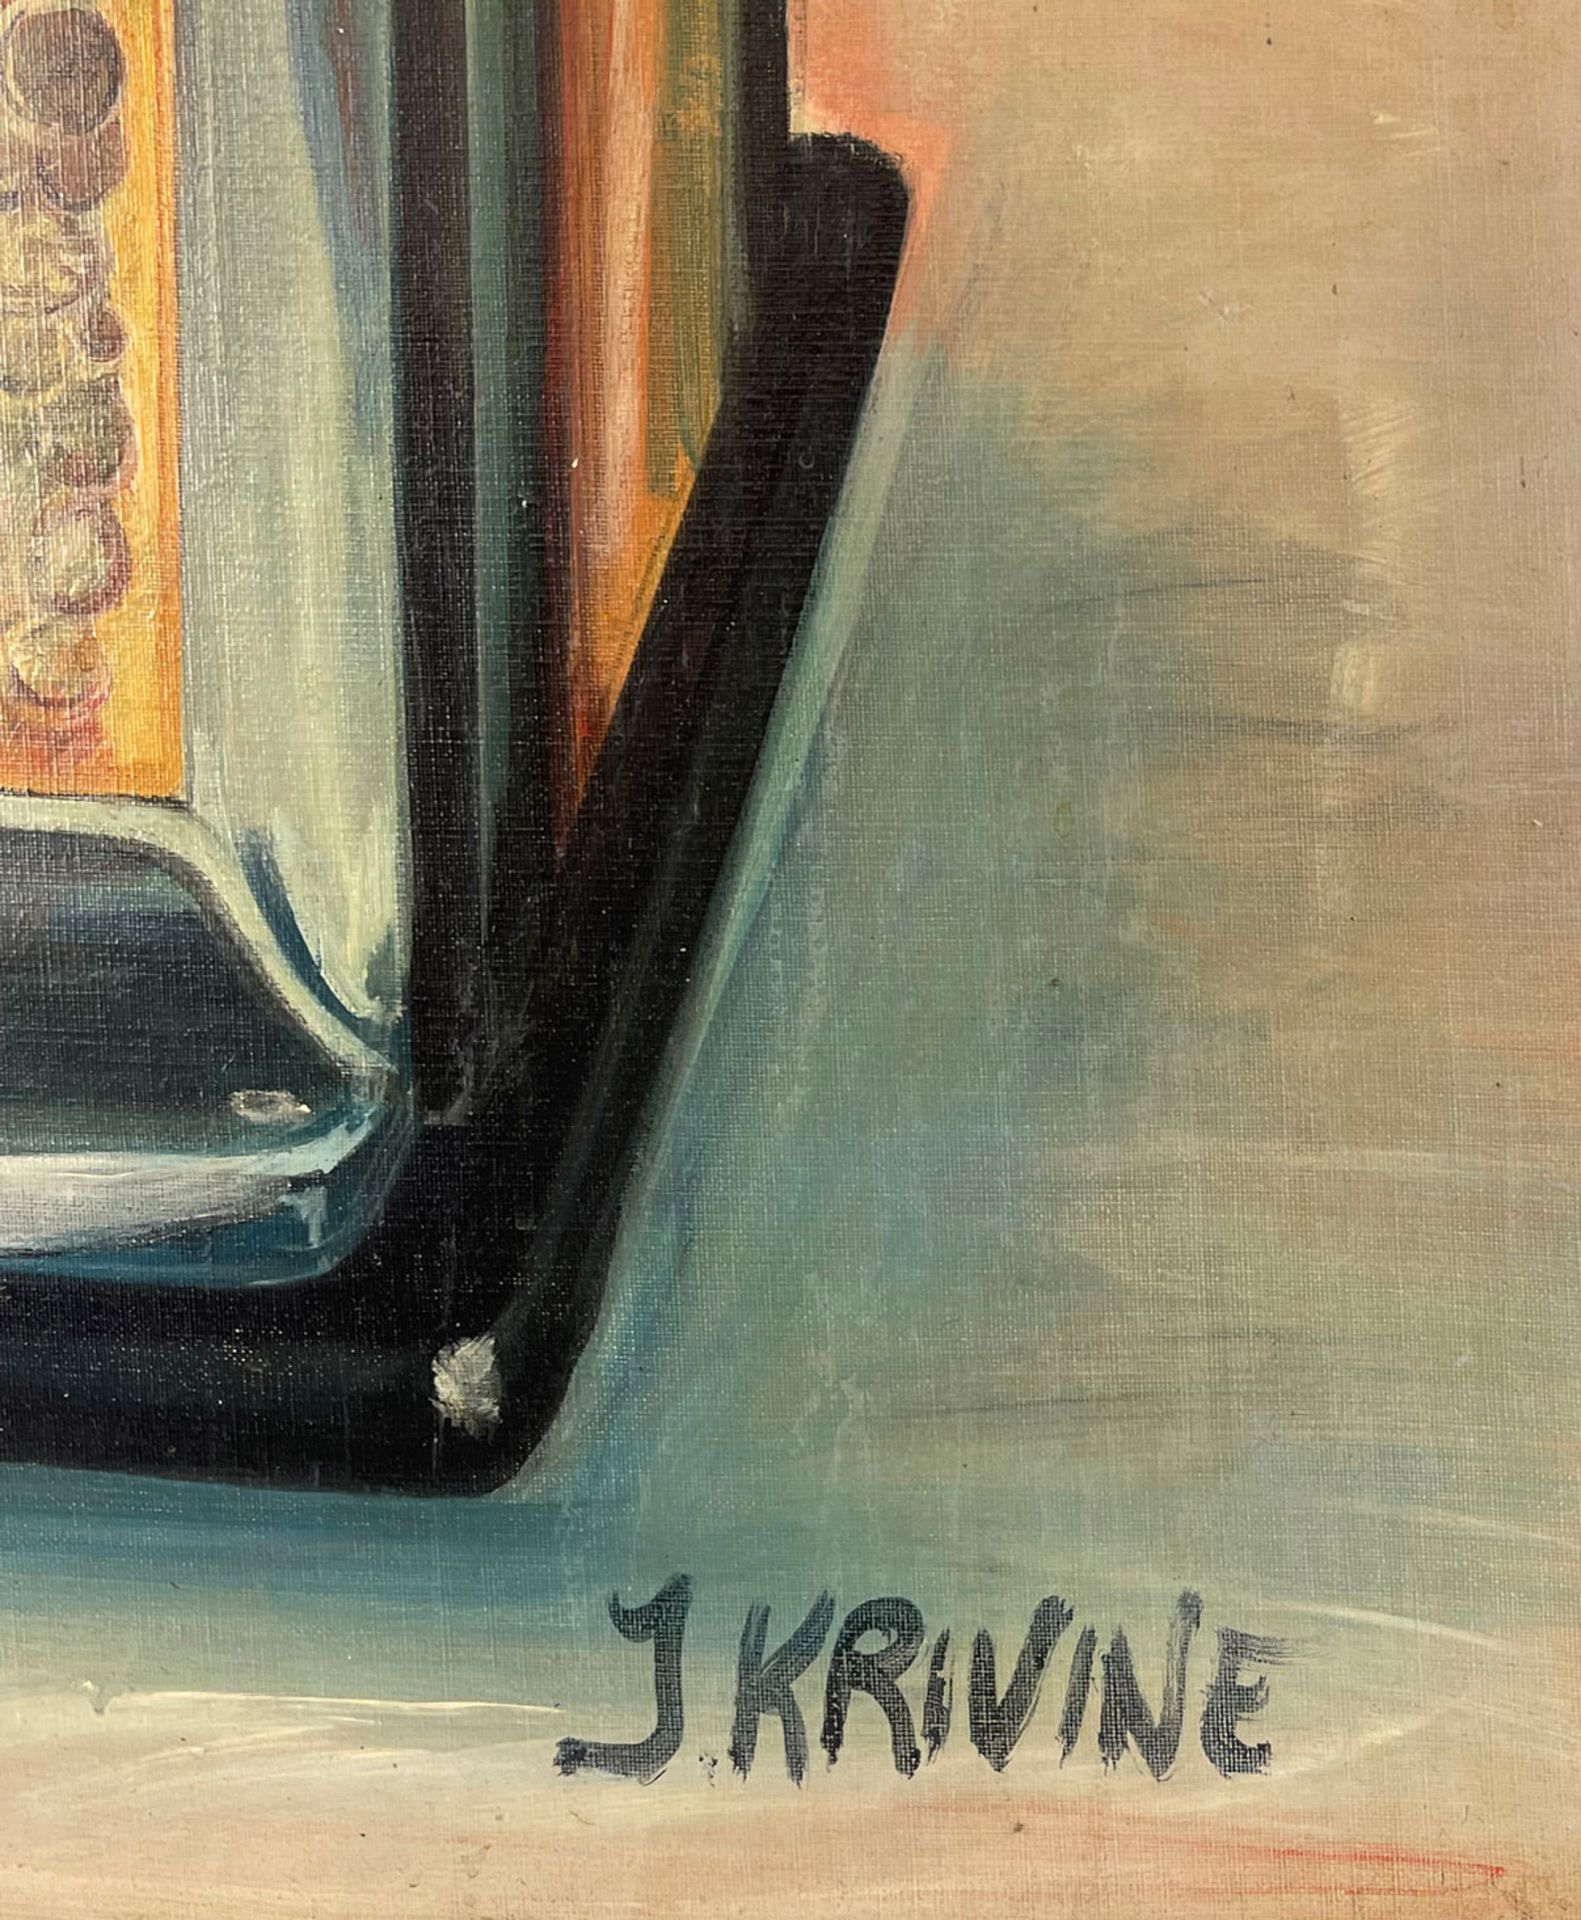 Framed J. Krivine Painting of Watling Treasury Slot Machine - Image 2 of 5